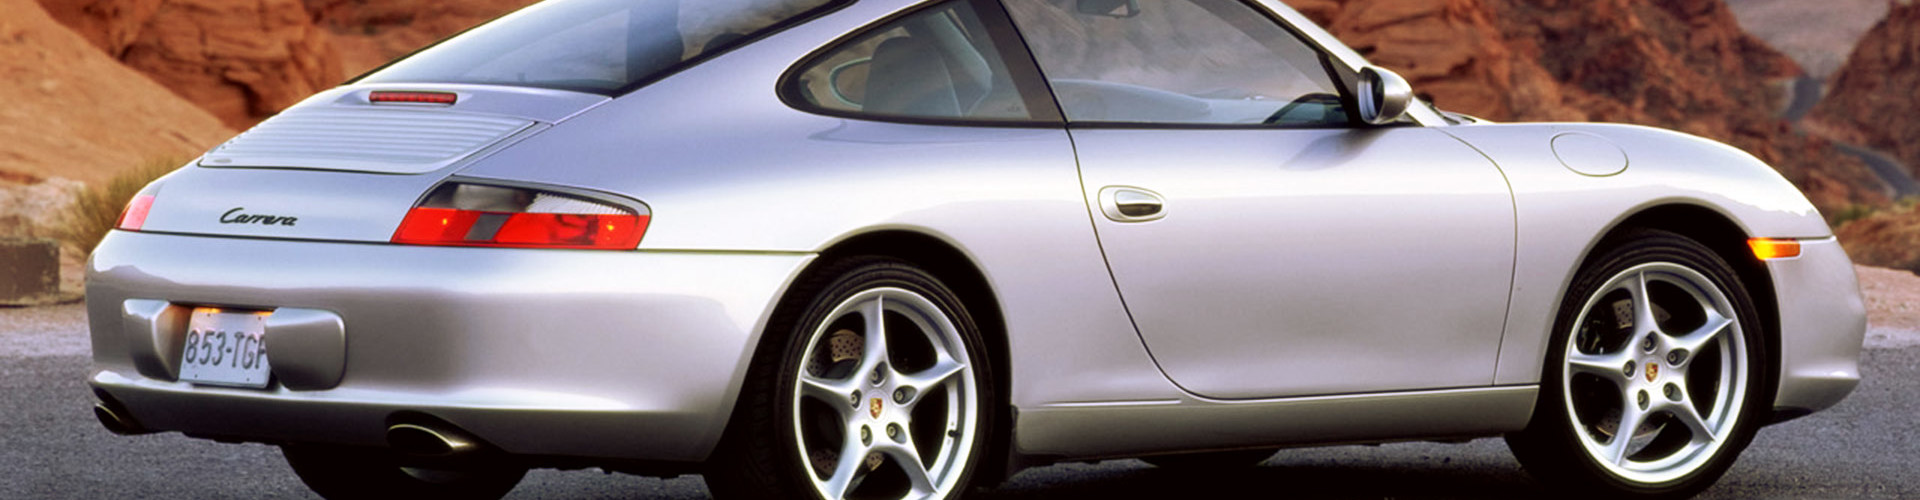 Porsche 911 Buyers Guide 996 | Used Porsche 911 Guide | 996